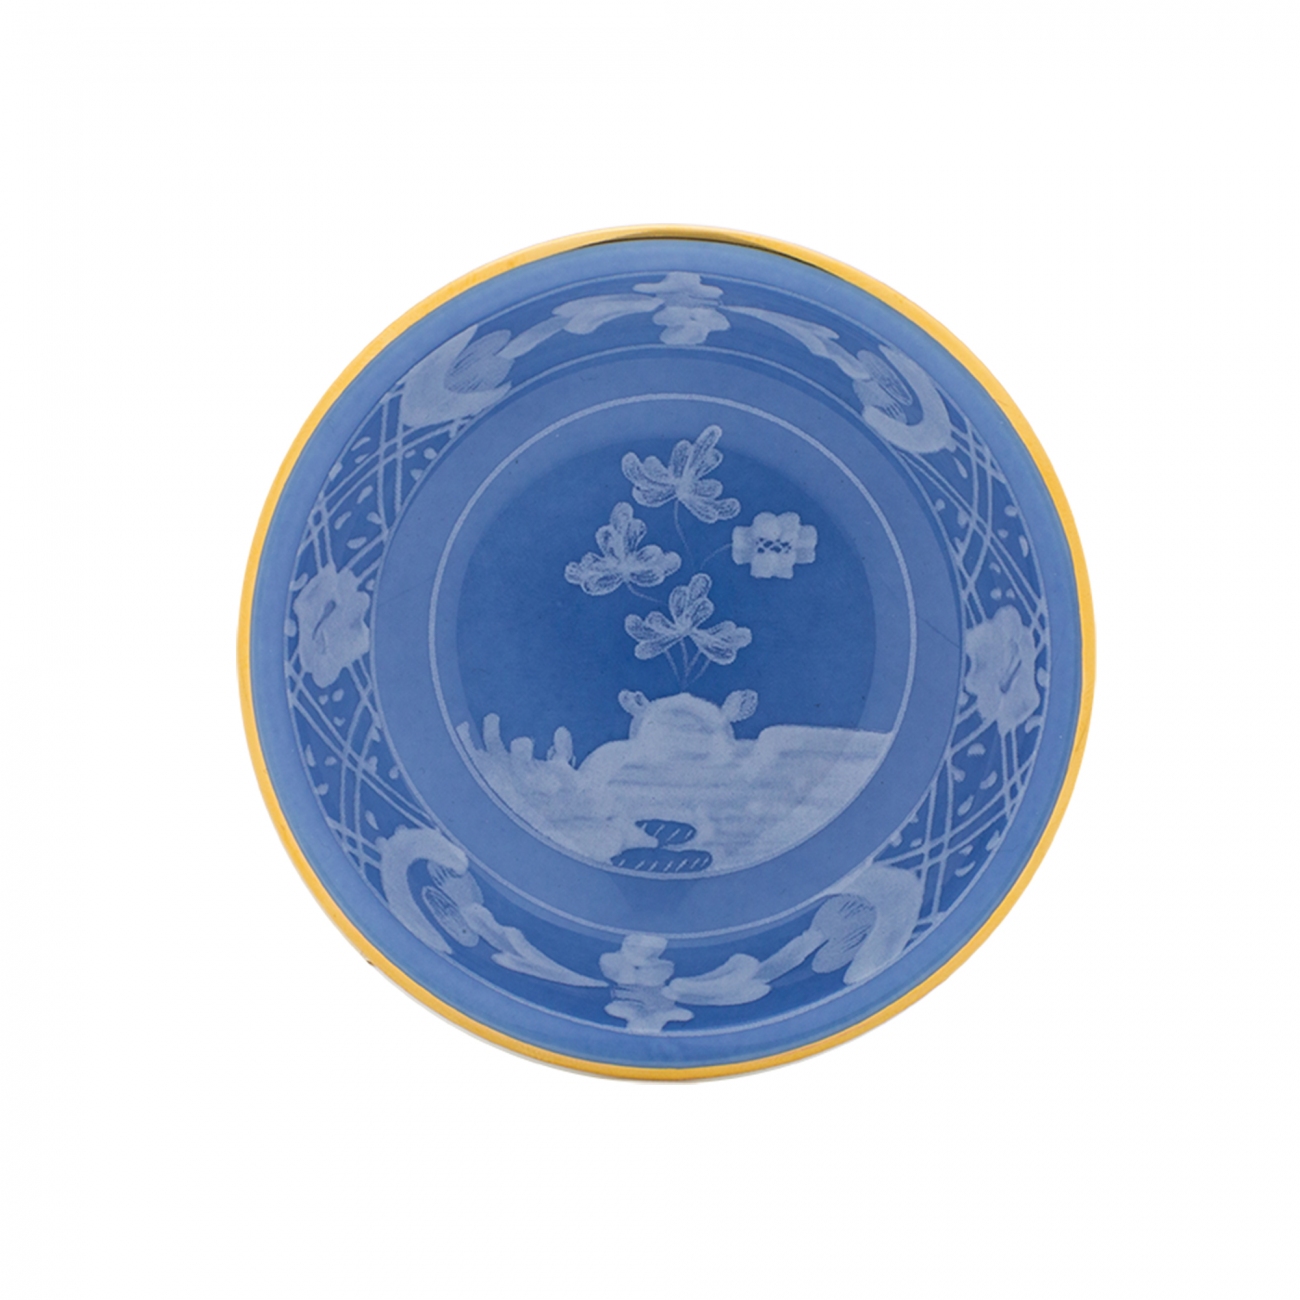 Ginori 1735 Oriente Italiano Soy bowl Set of 2